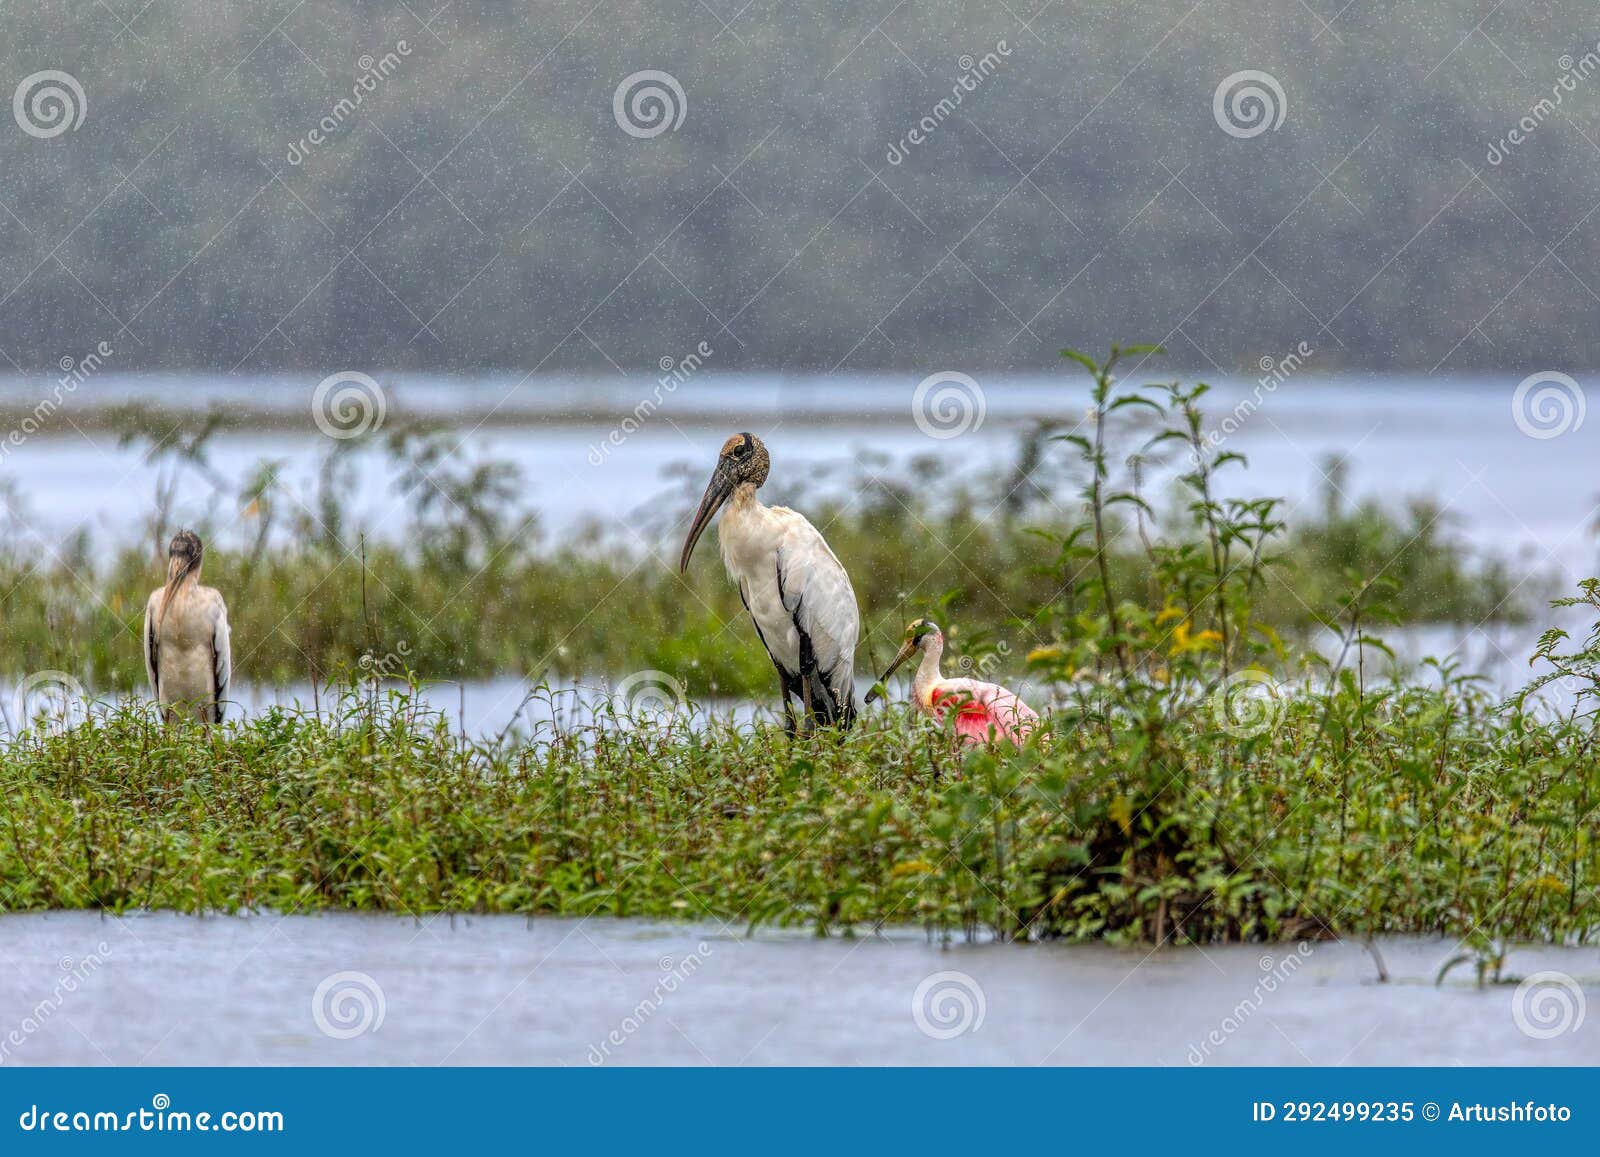 wood stork - mycteria americana. refugio de vida silvestre cano negro, wildlife and bird watching in costa rica